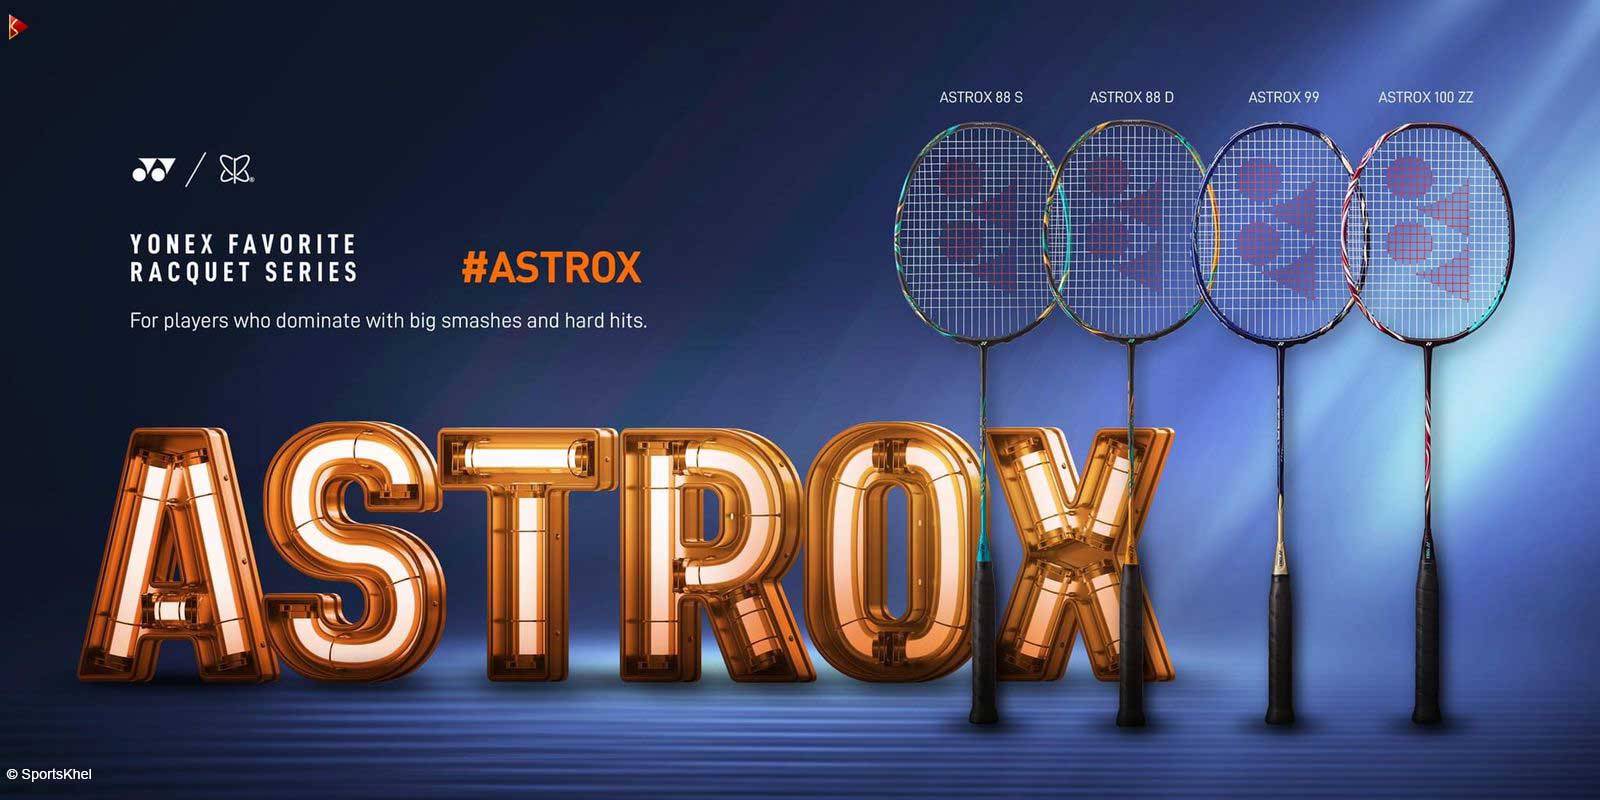 Yonex Astrox 99 Badminton Racket Features